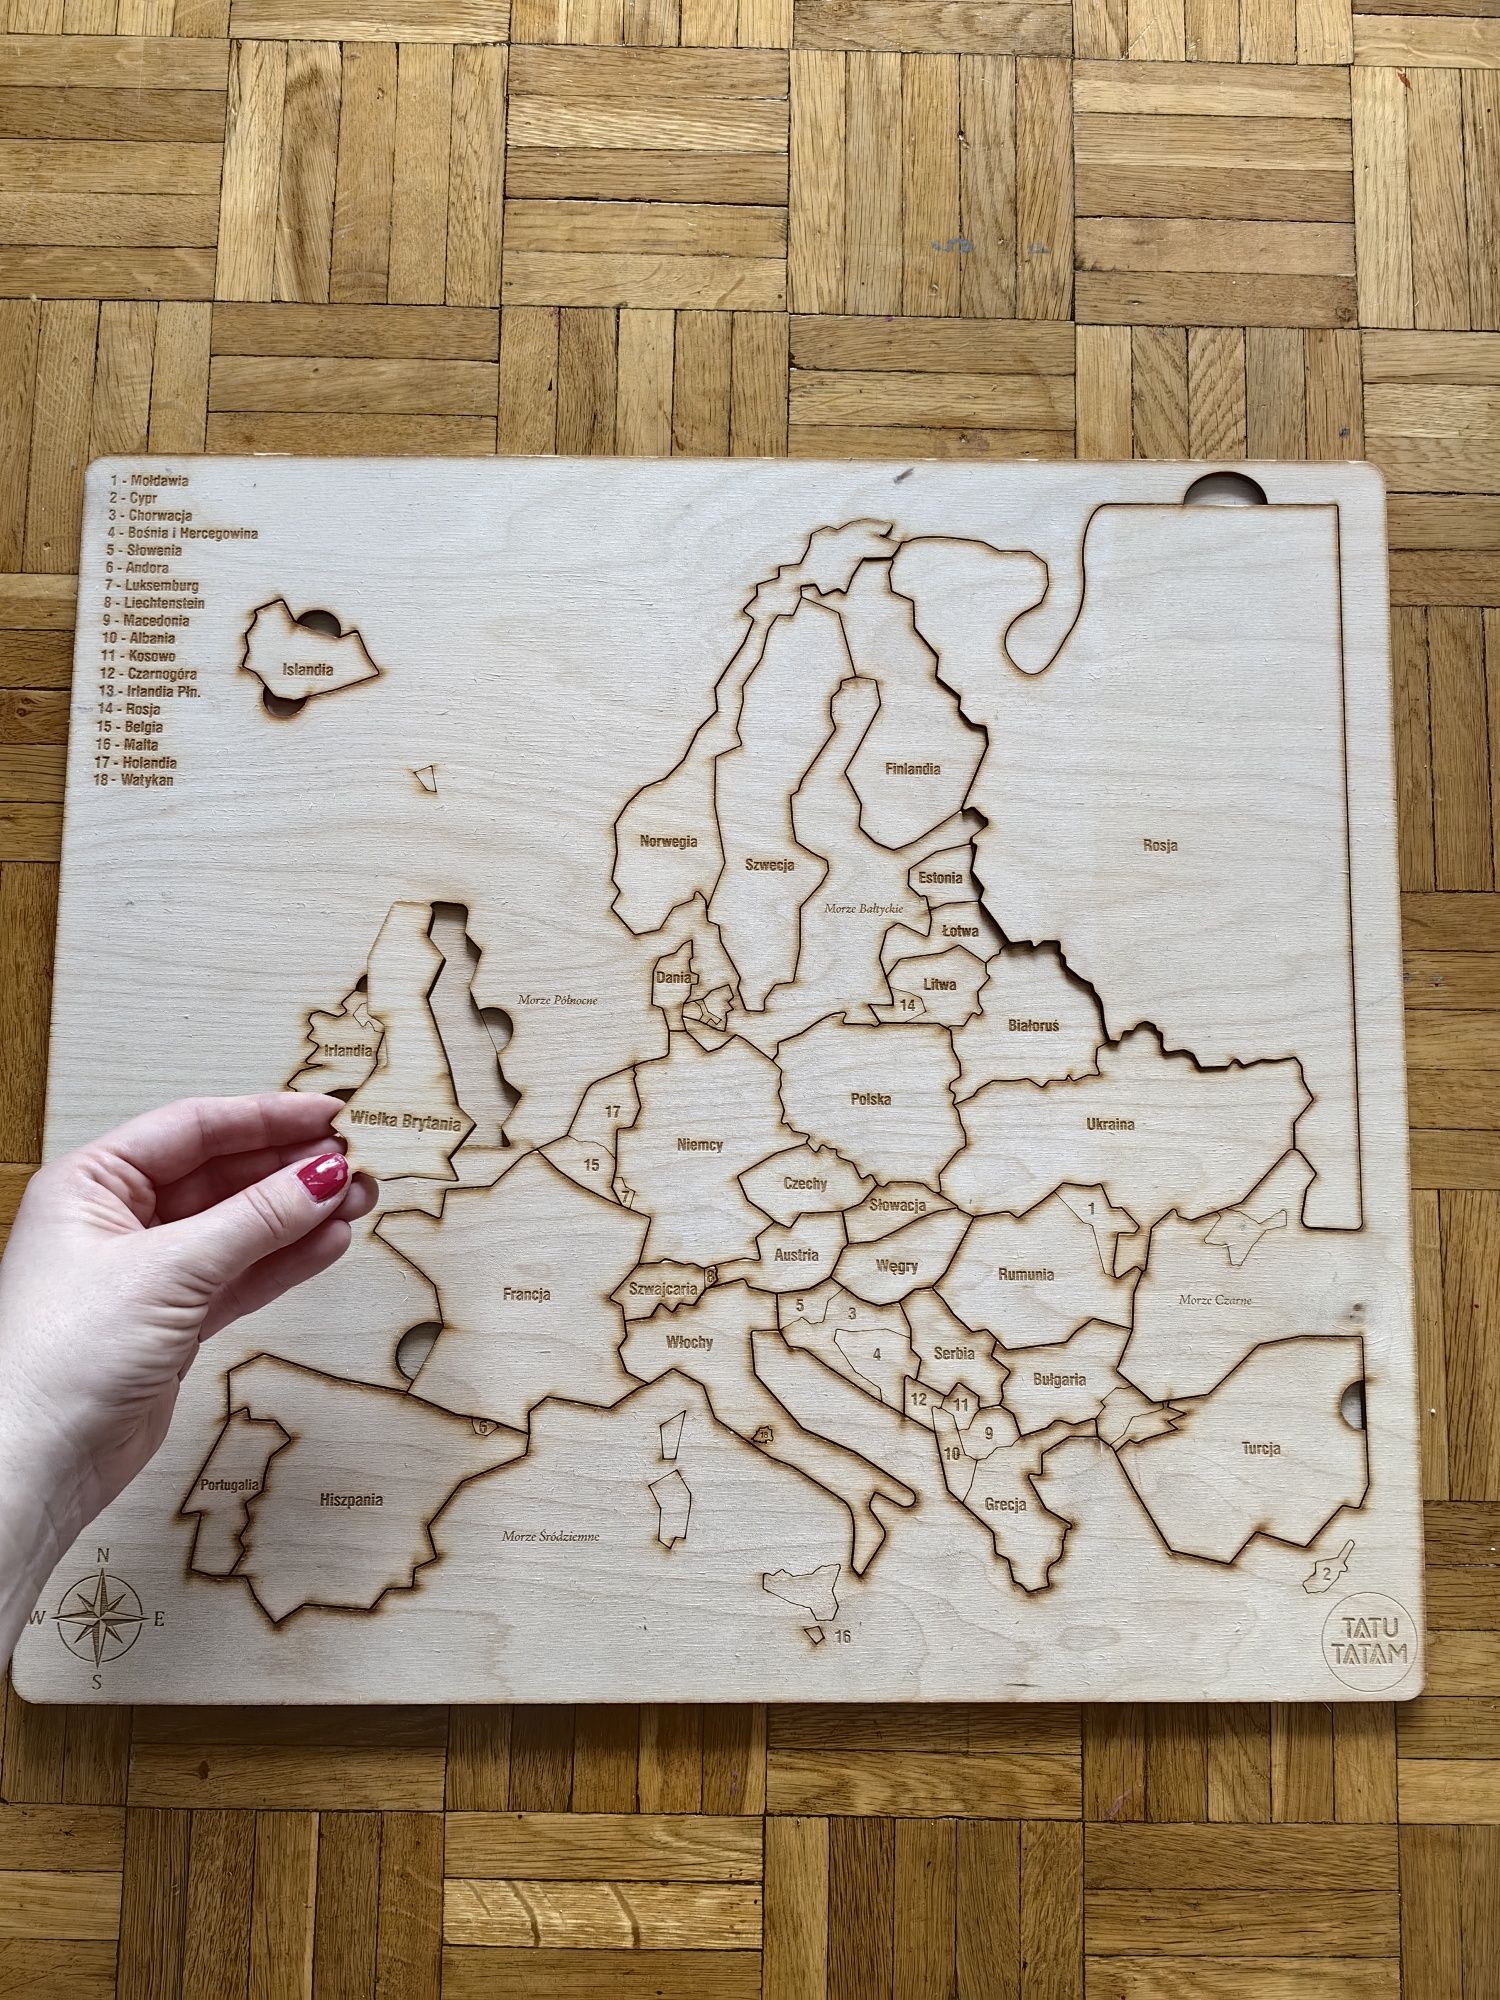 TATUTATAM mapa drewniana Europy duża do nauki